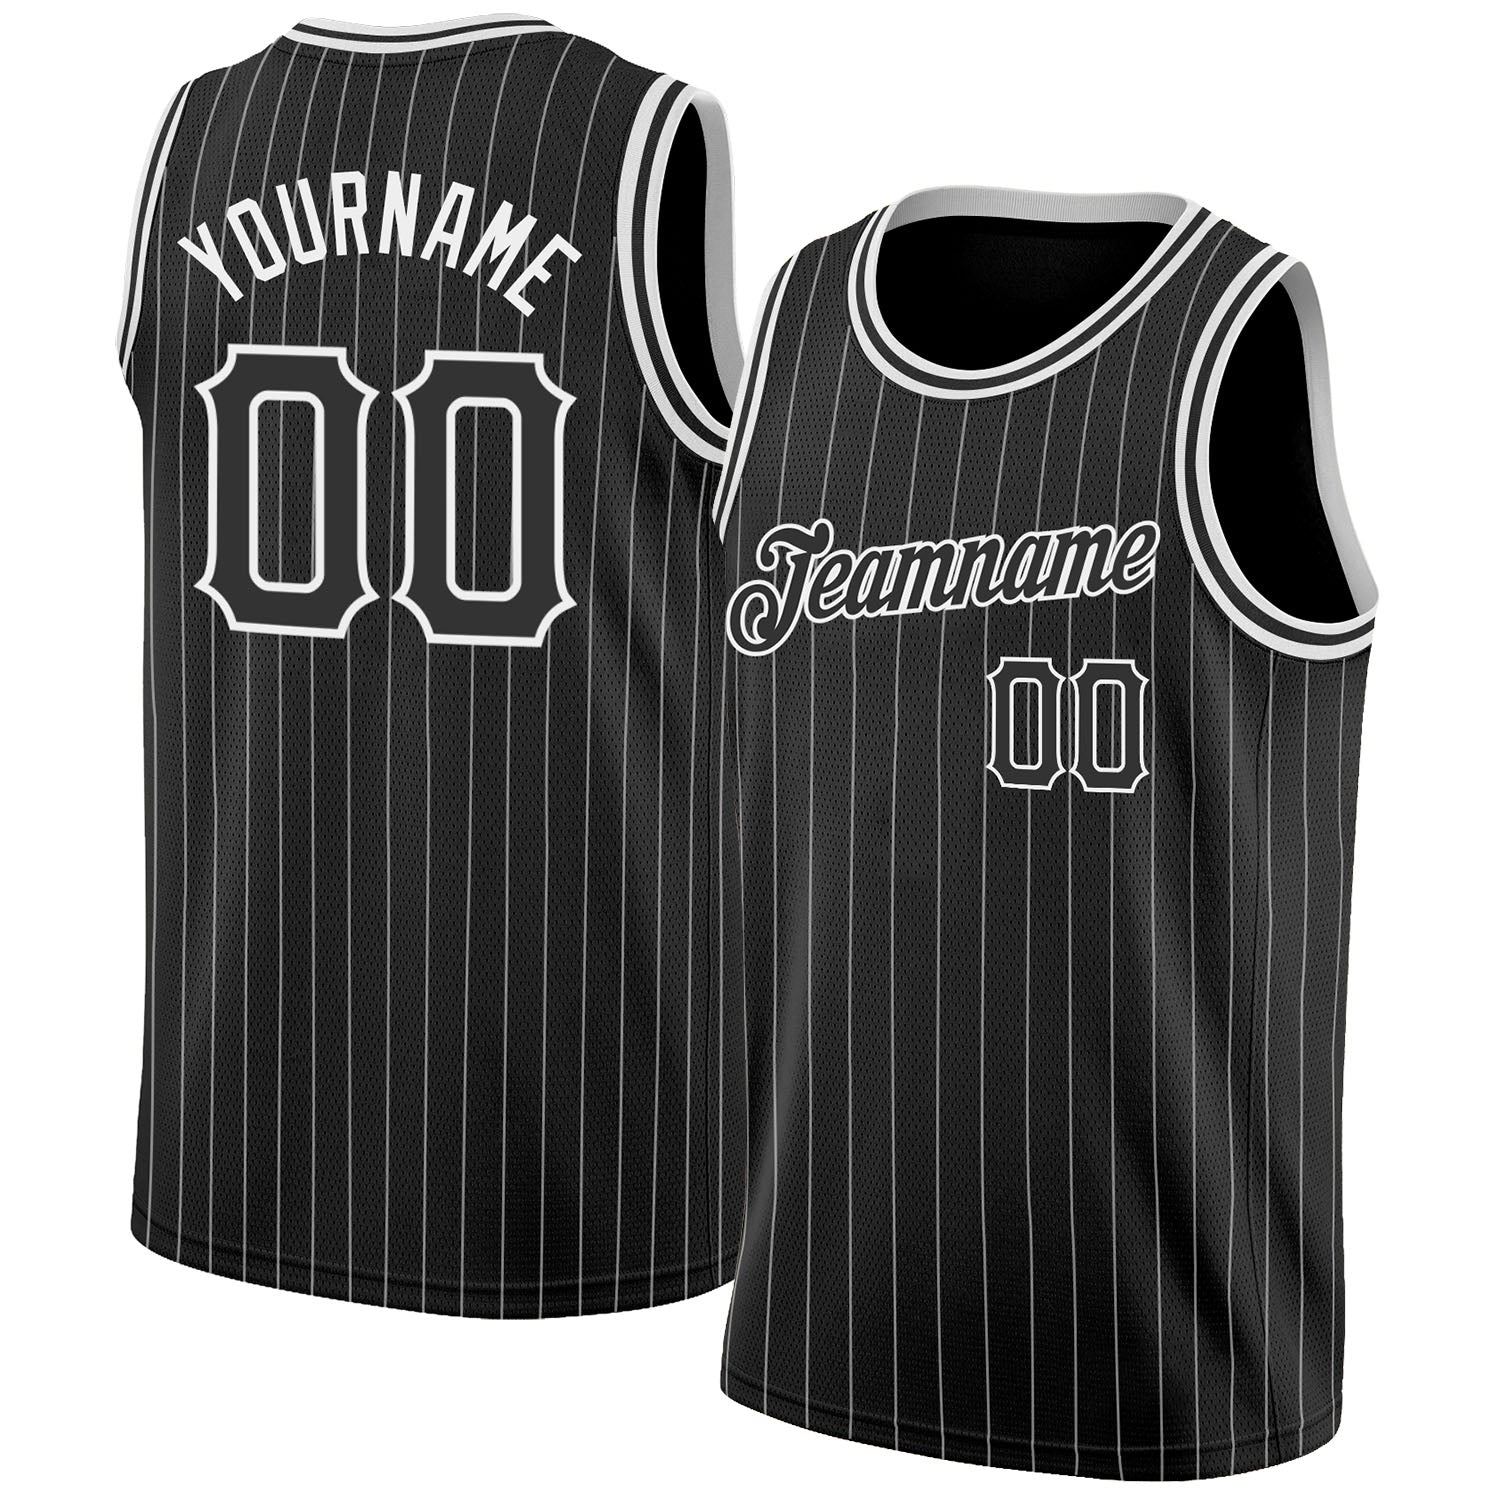 FIITG Custom Basketball Jersey Black White Pinstripe Black-White Authentic Men's Size:3XL